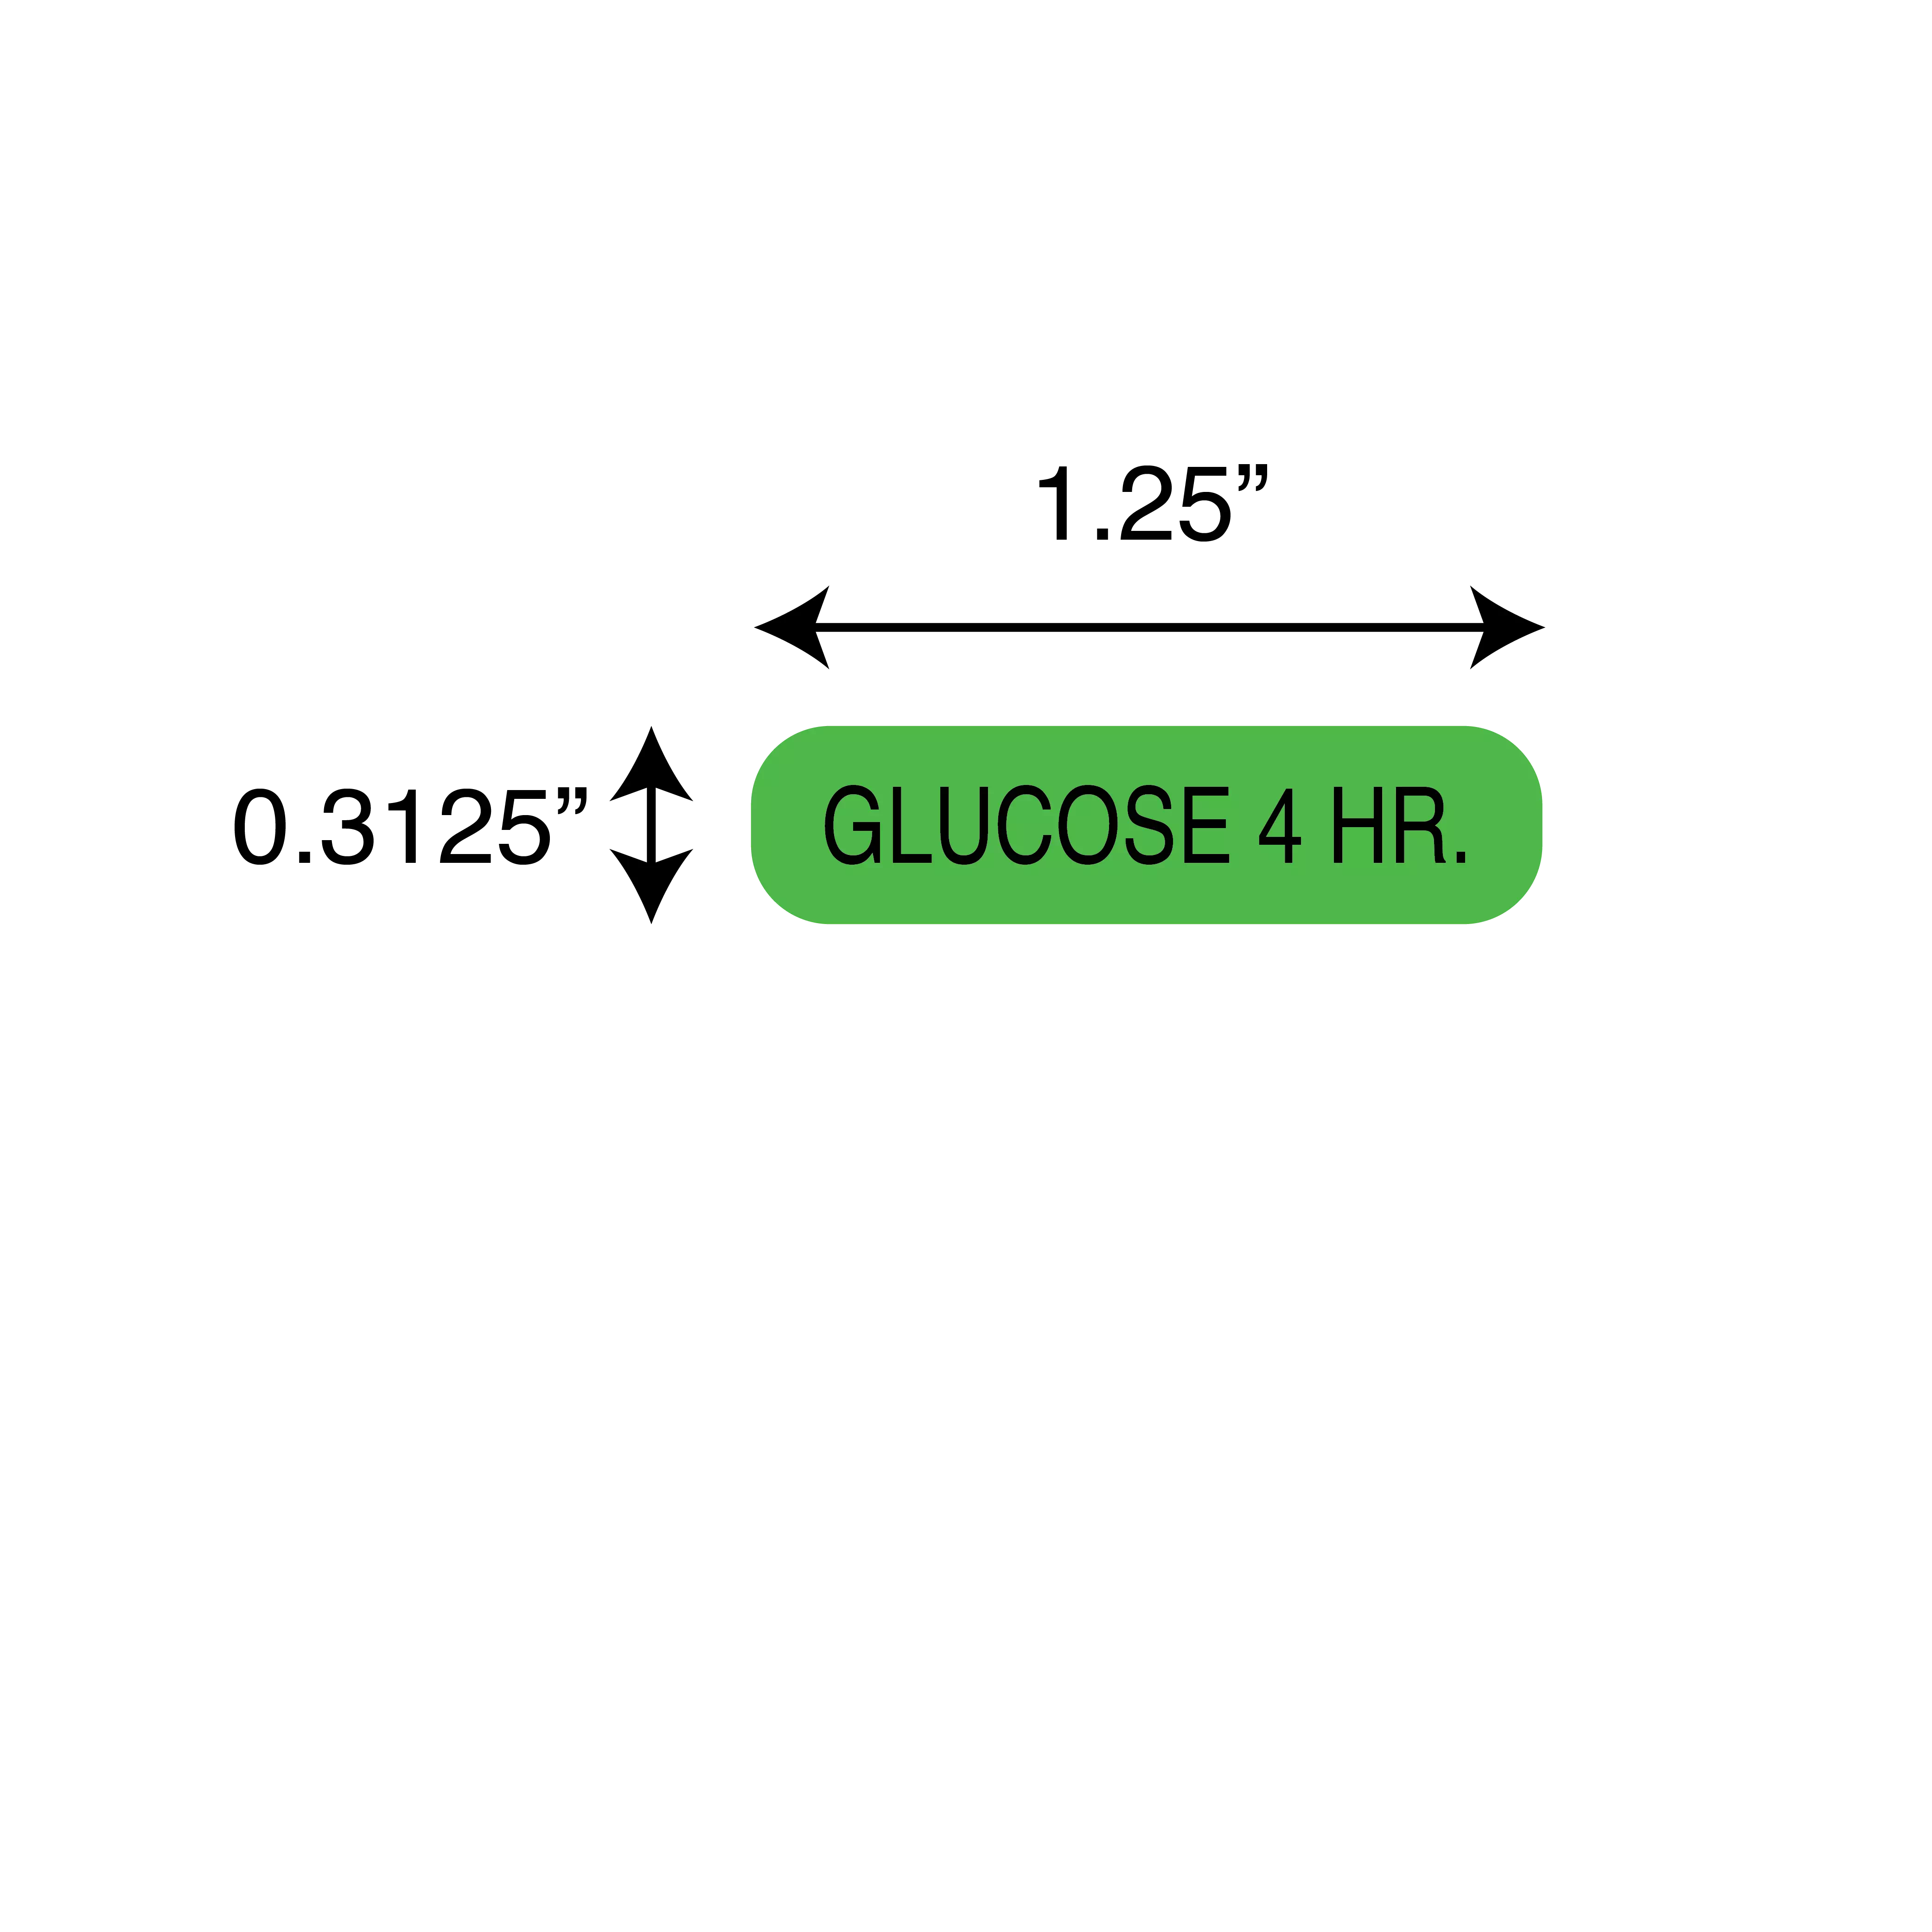 Label, Glucose 4 Hr.